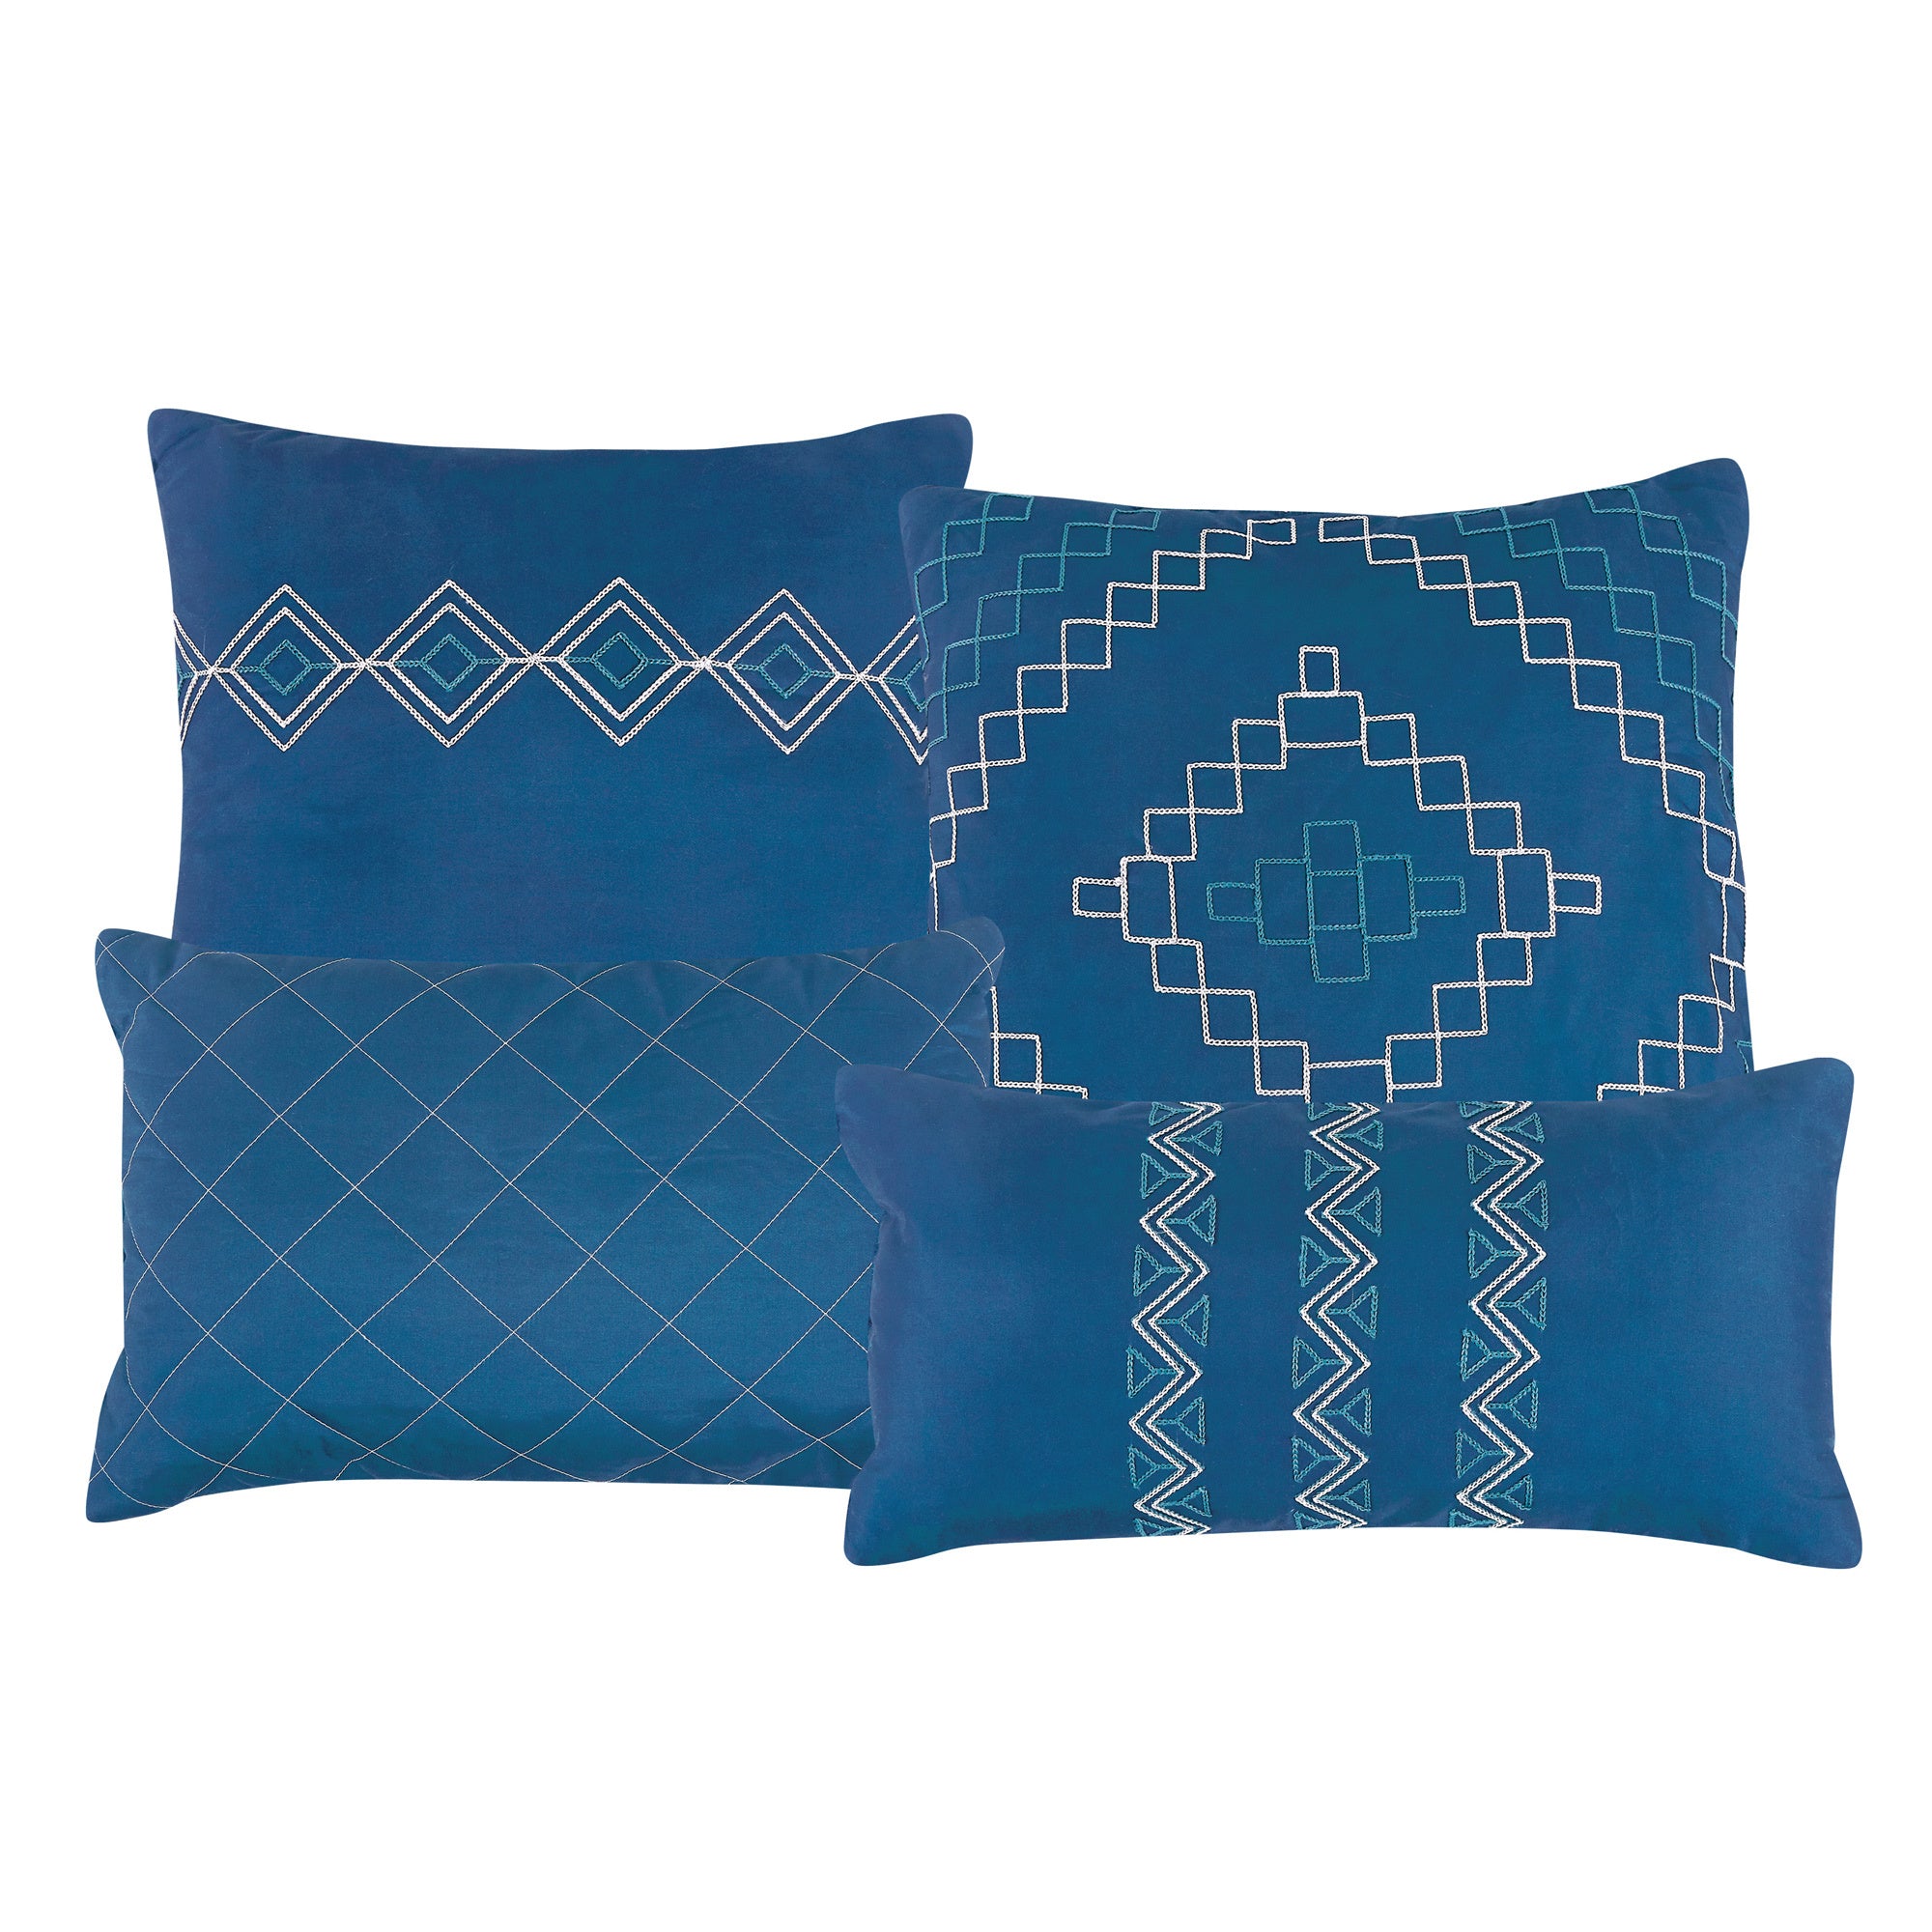 Navy Blue Embroidery Comforter Set 7PCS